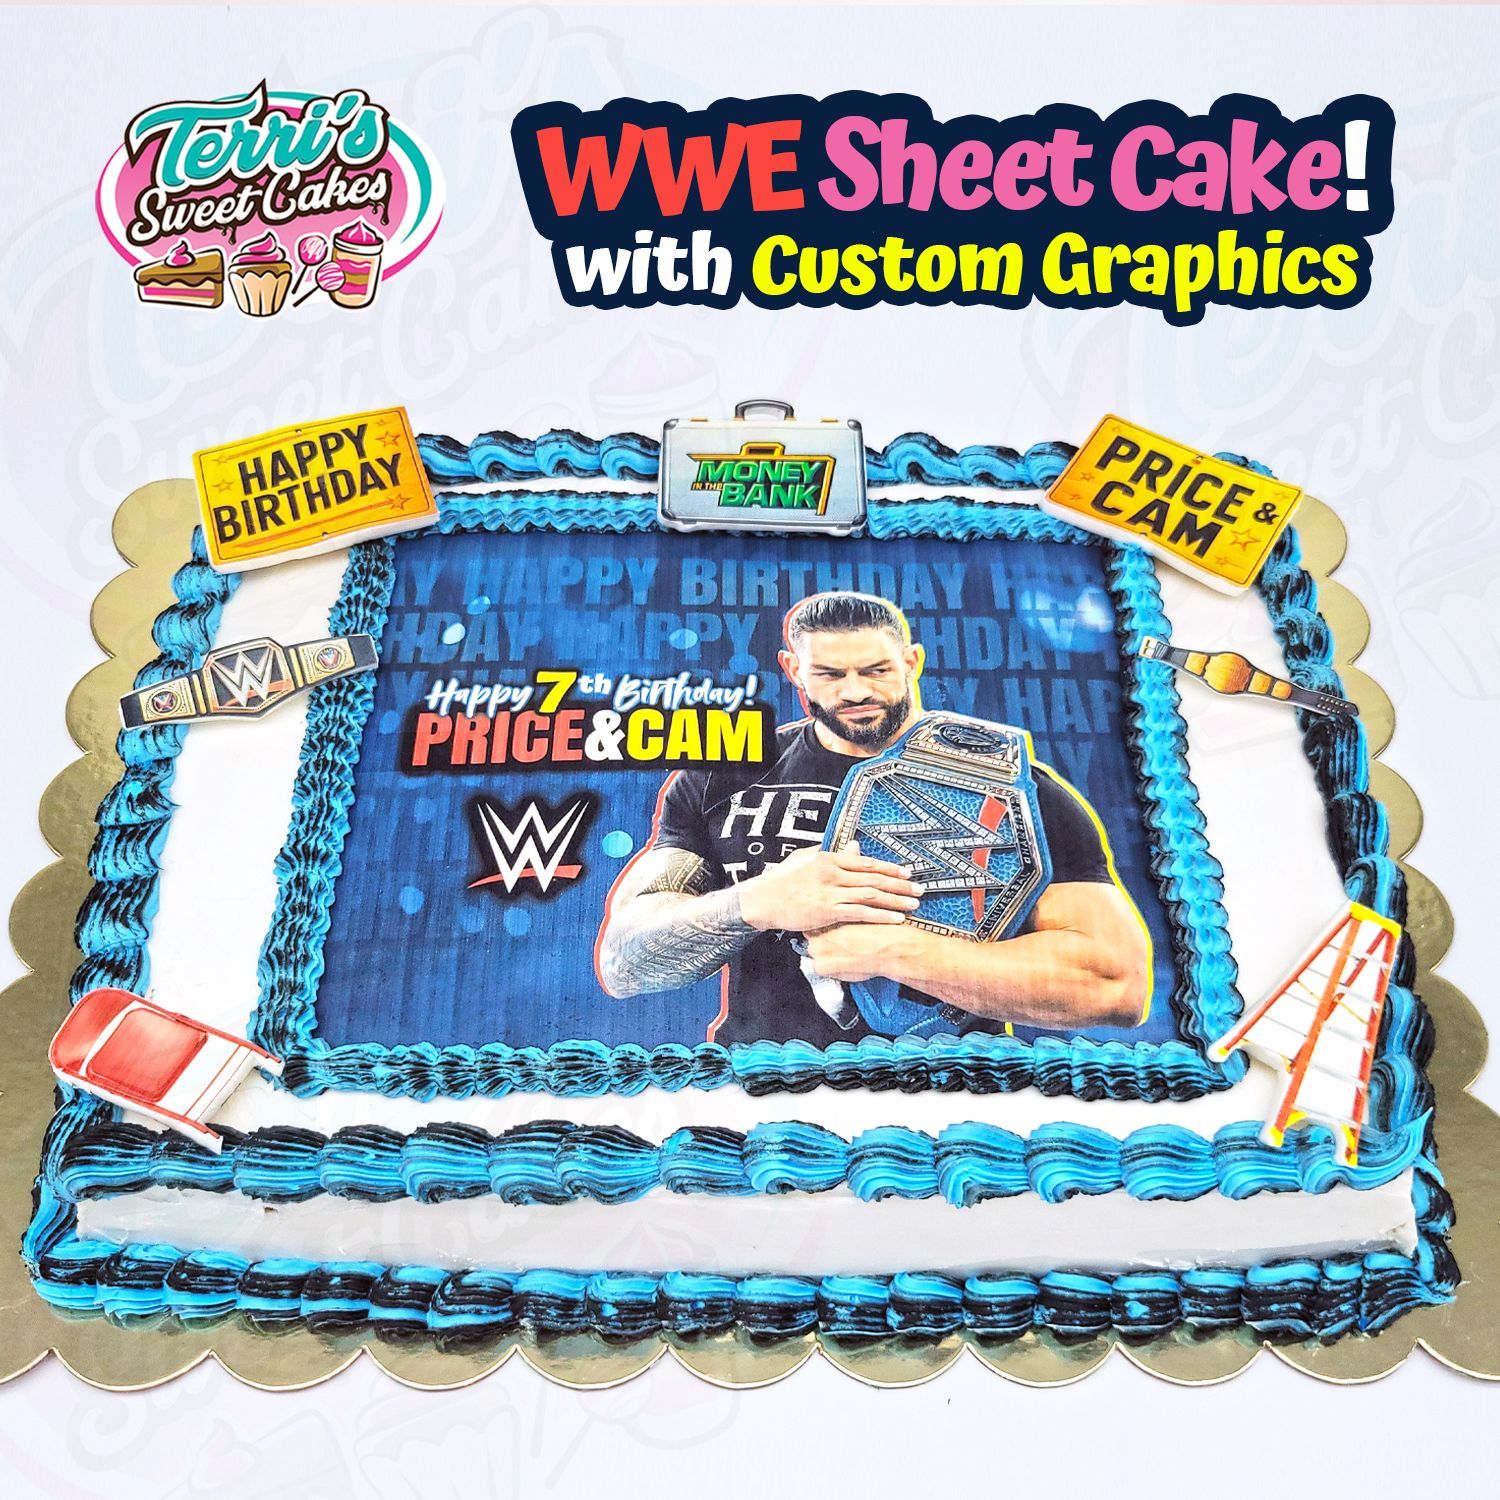 WWE Sheet Cake with custom graphics by Terri's Sweet Cakes!